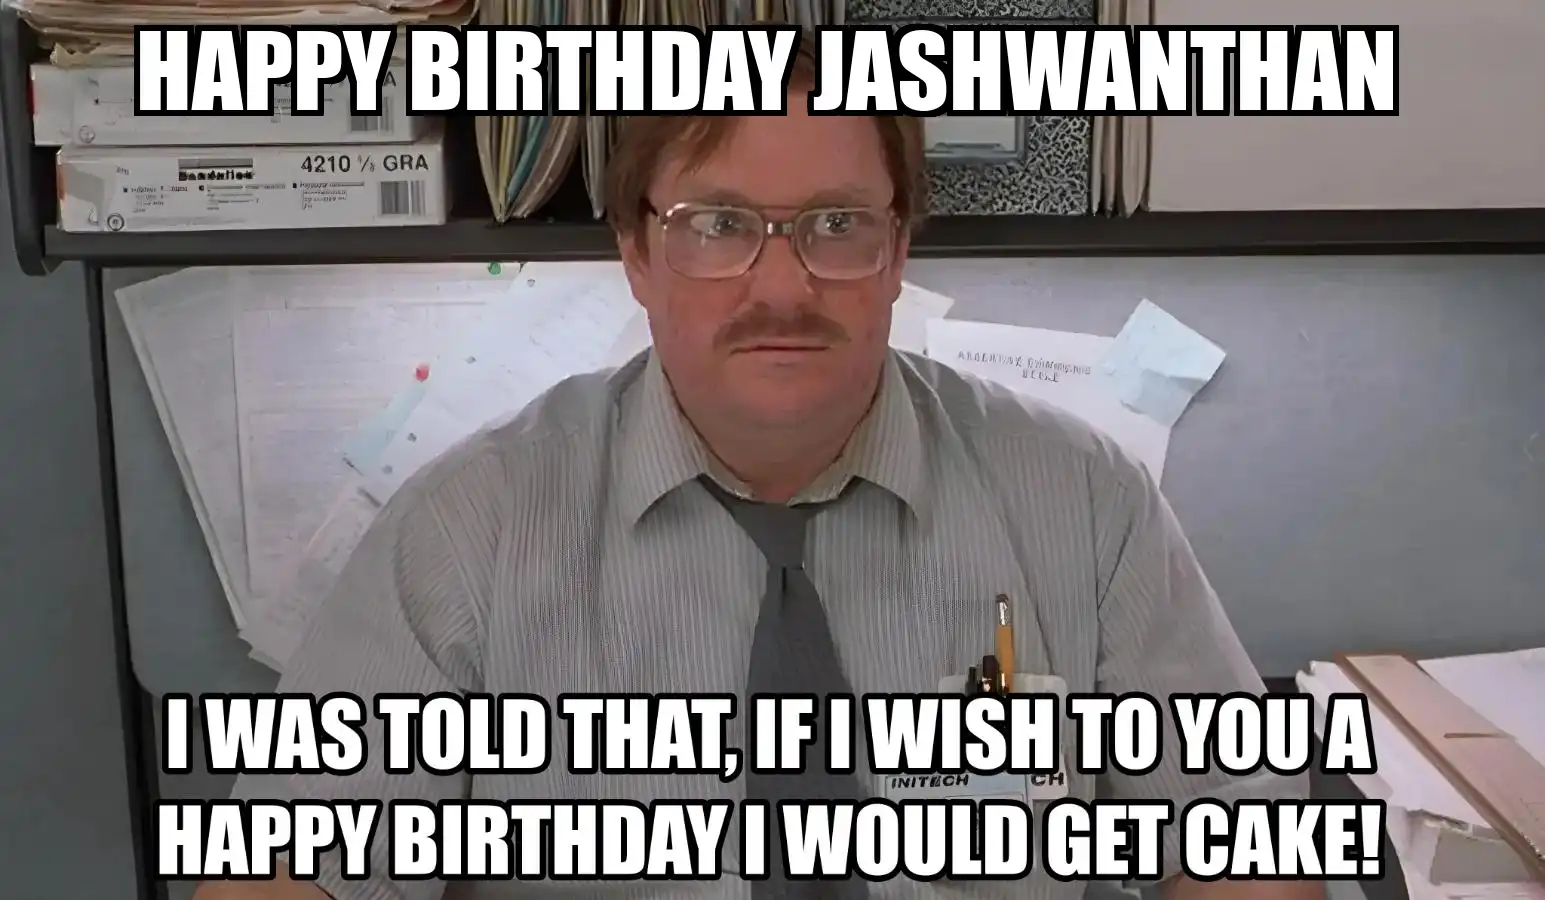 Happy Birthday Jashwanthan I Would Get A Cake Meme